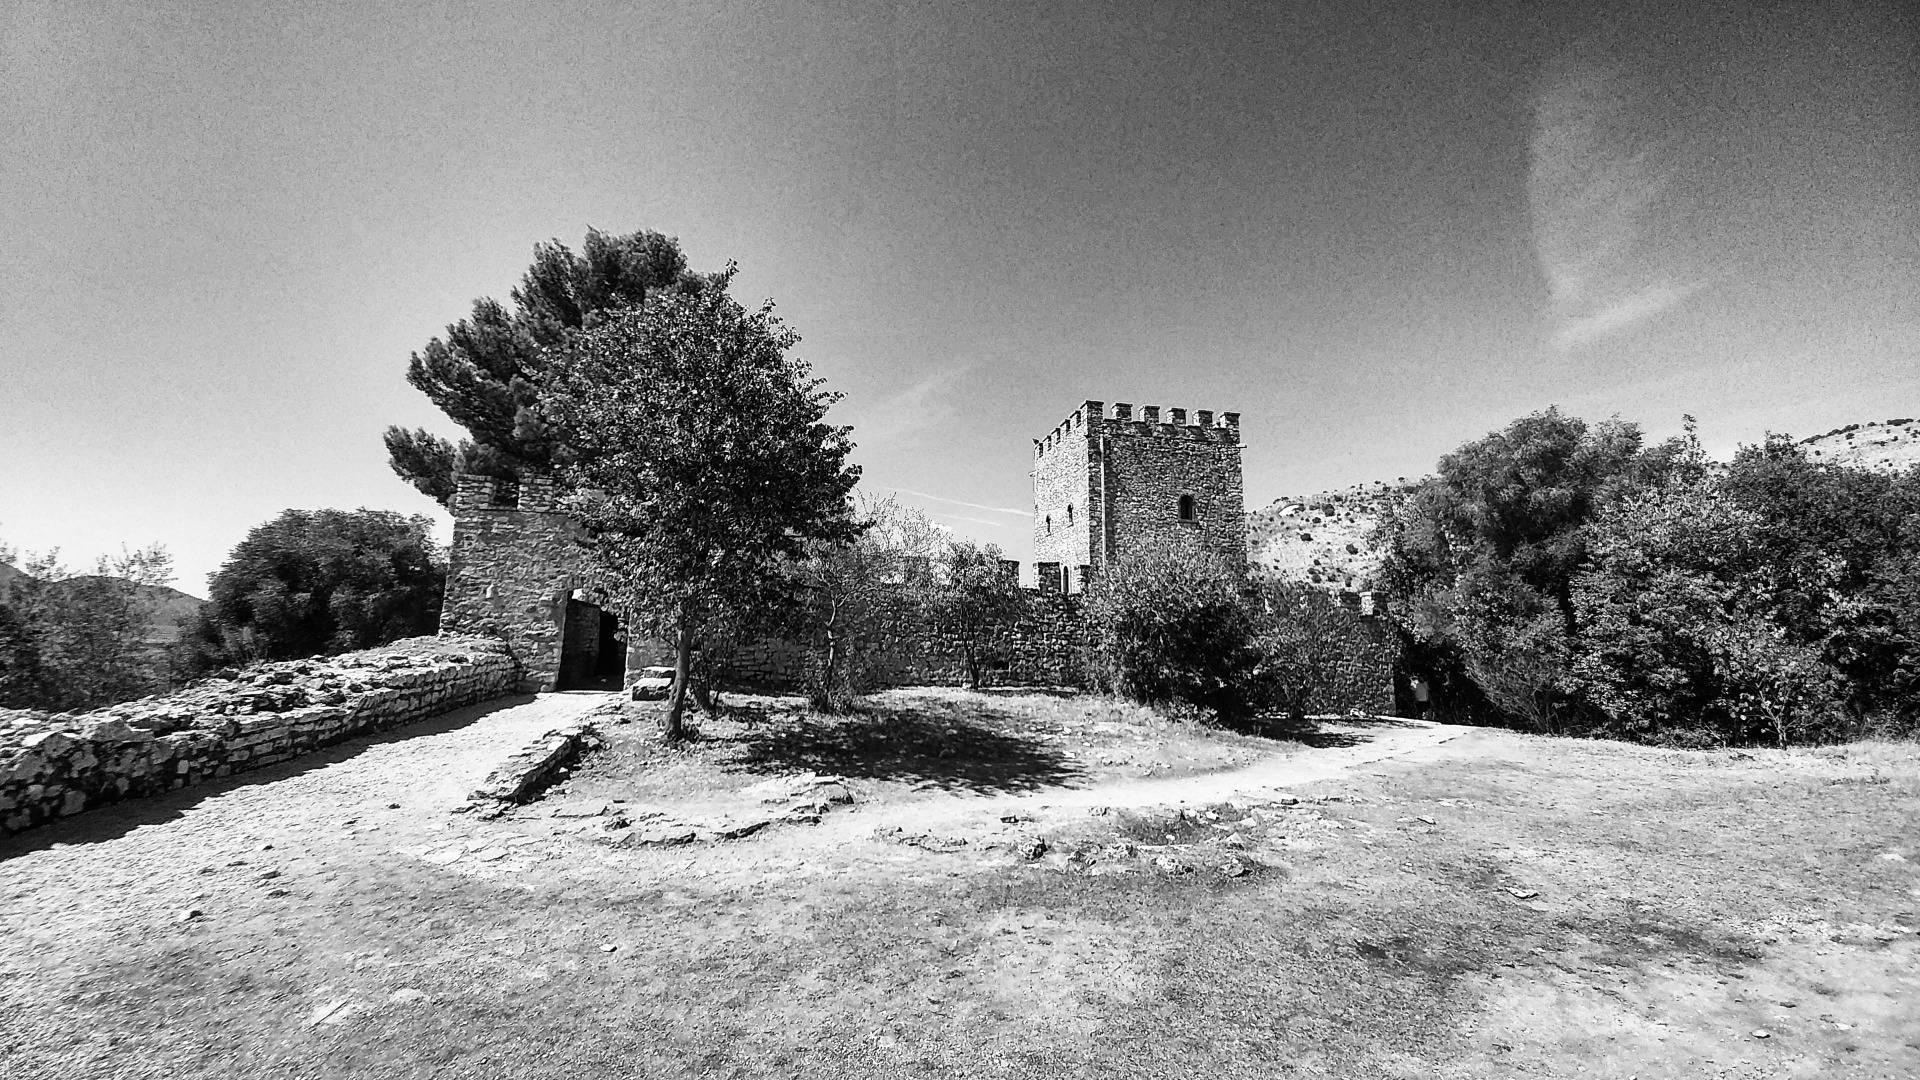 The castle in black & white